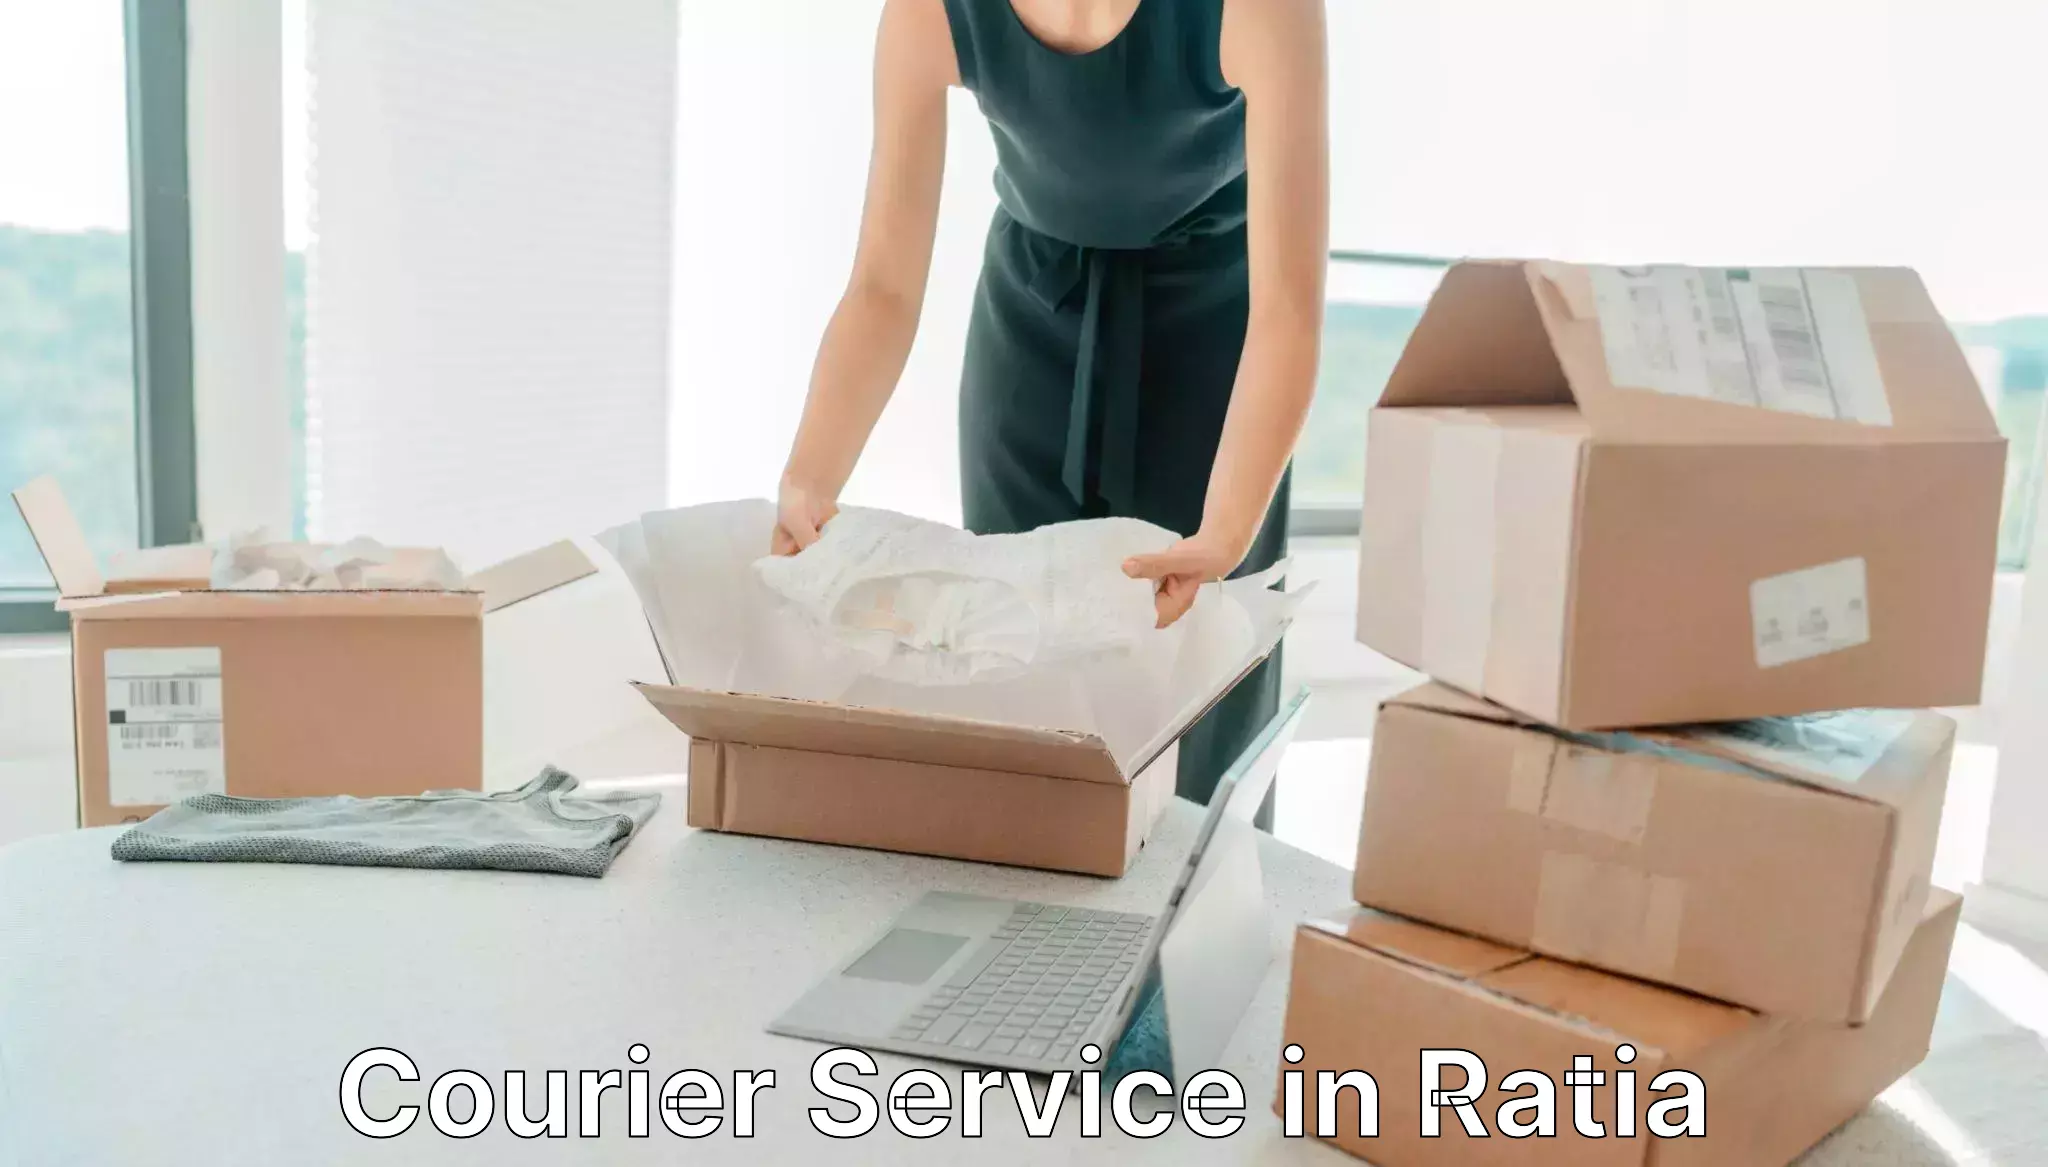 Regular parcel service in Ratia